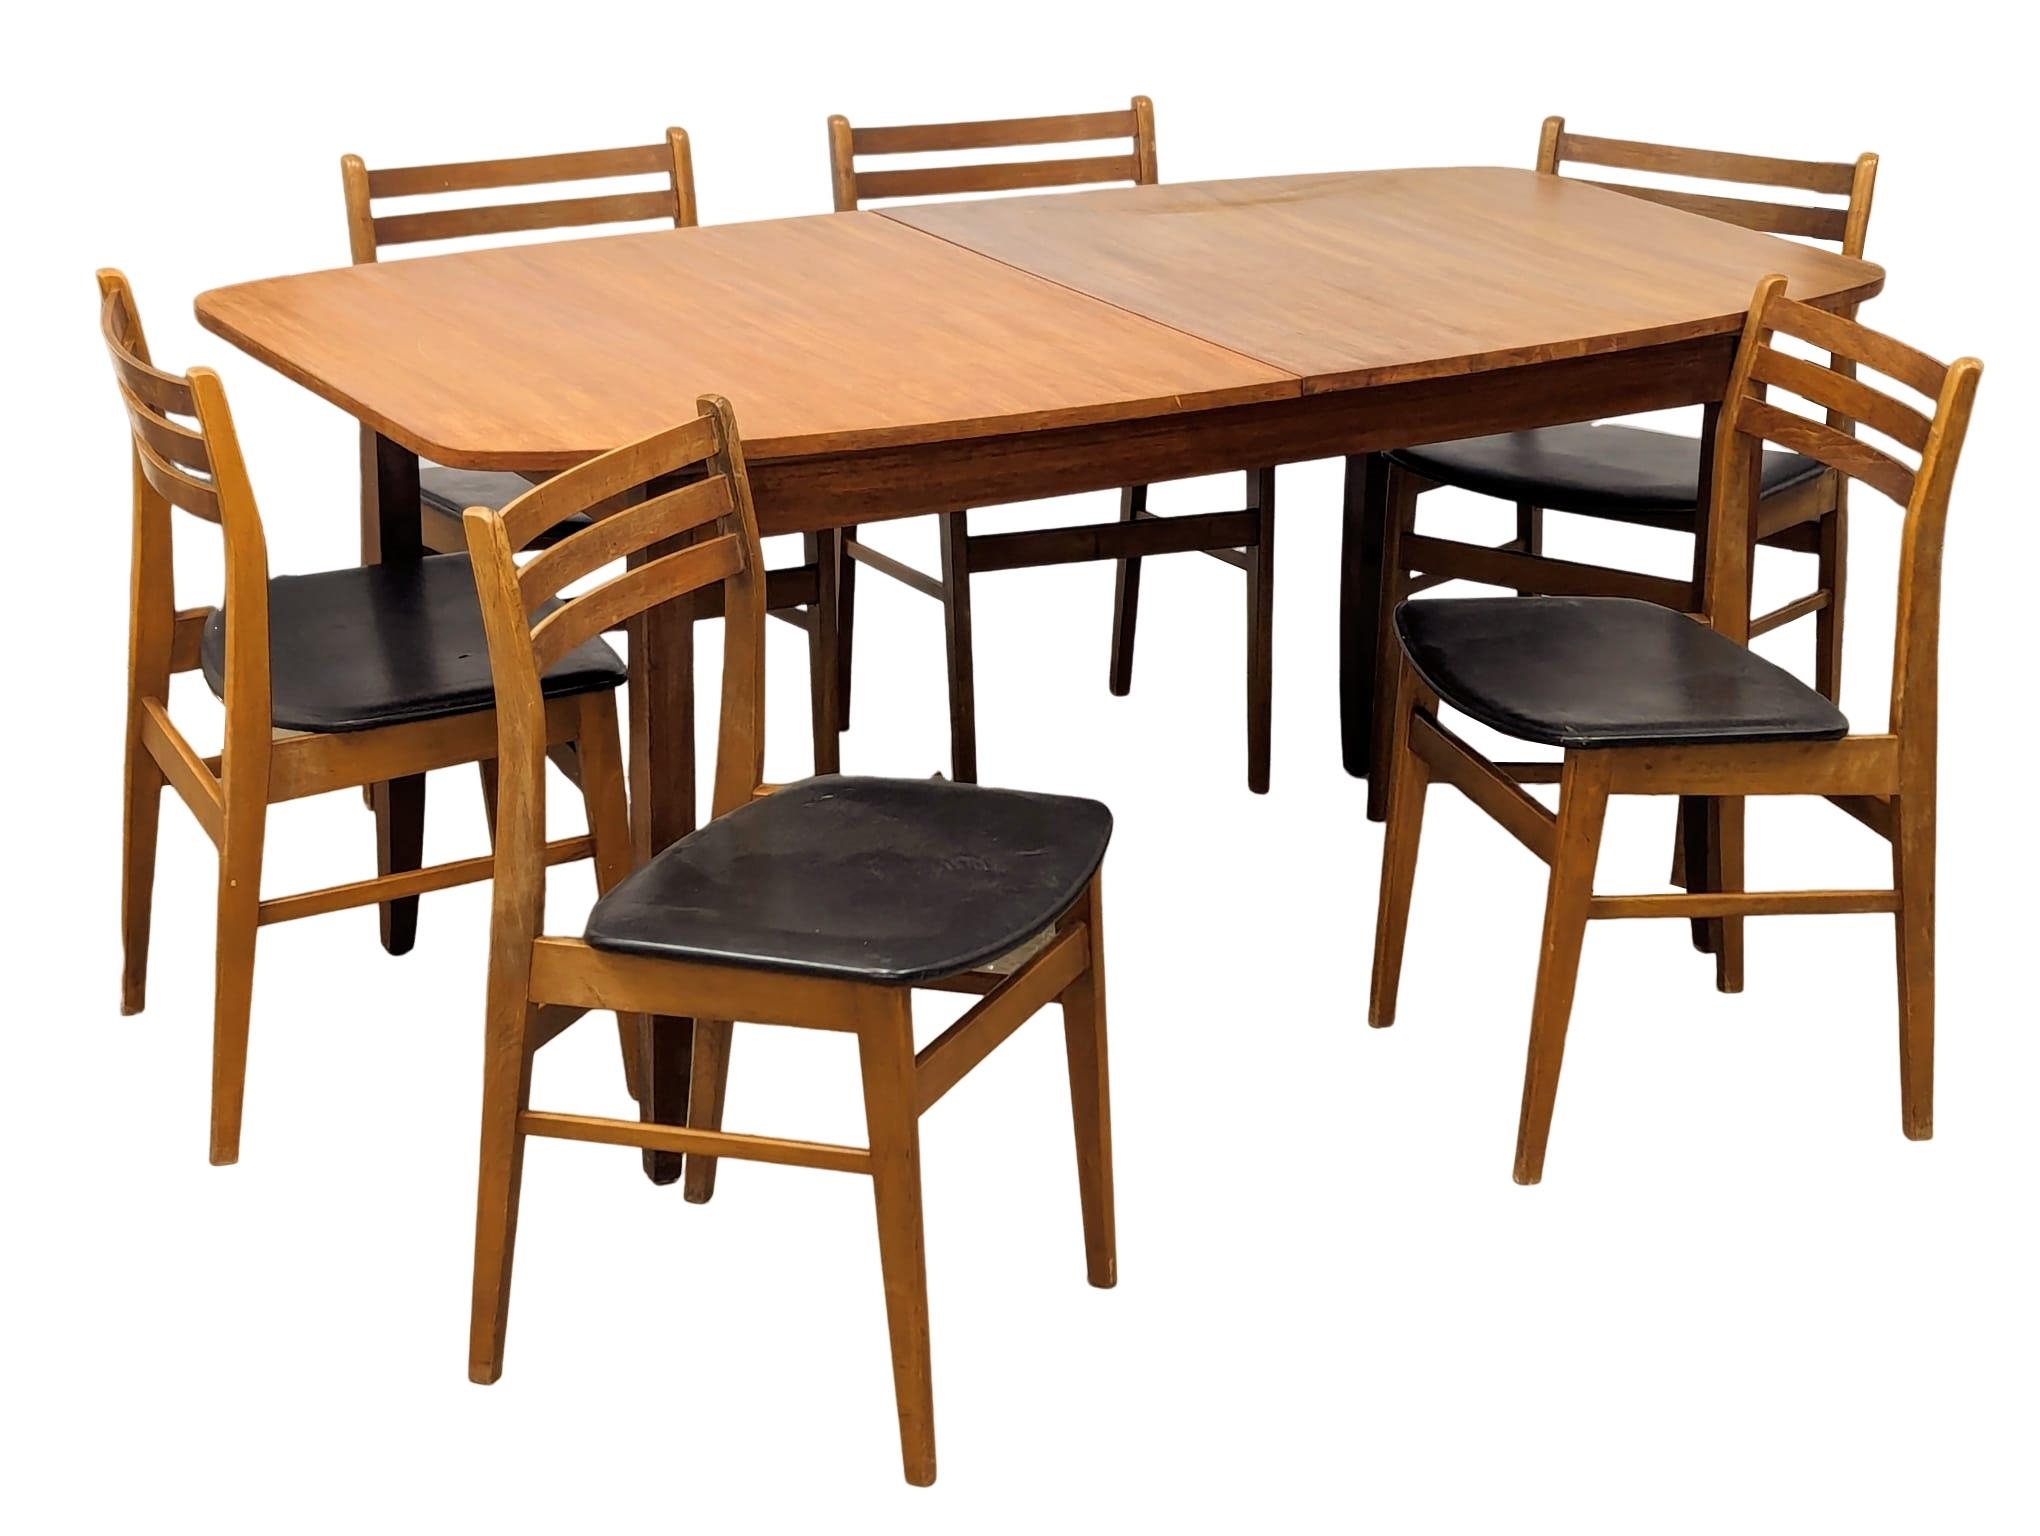 A mid century teak table and 6 chairs, 168cm x 89cm x 75cm. Extended 211cm x 89cm x 75cm